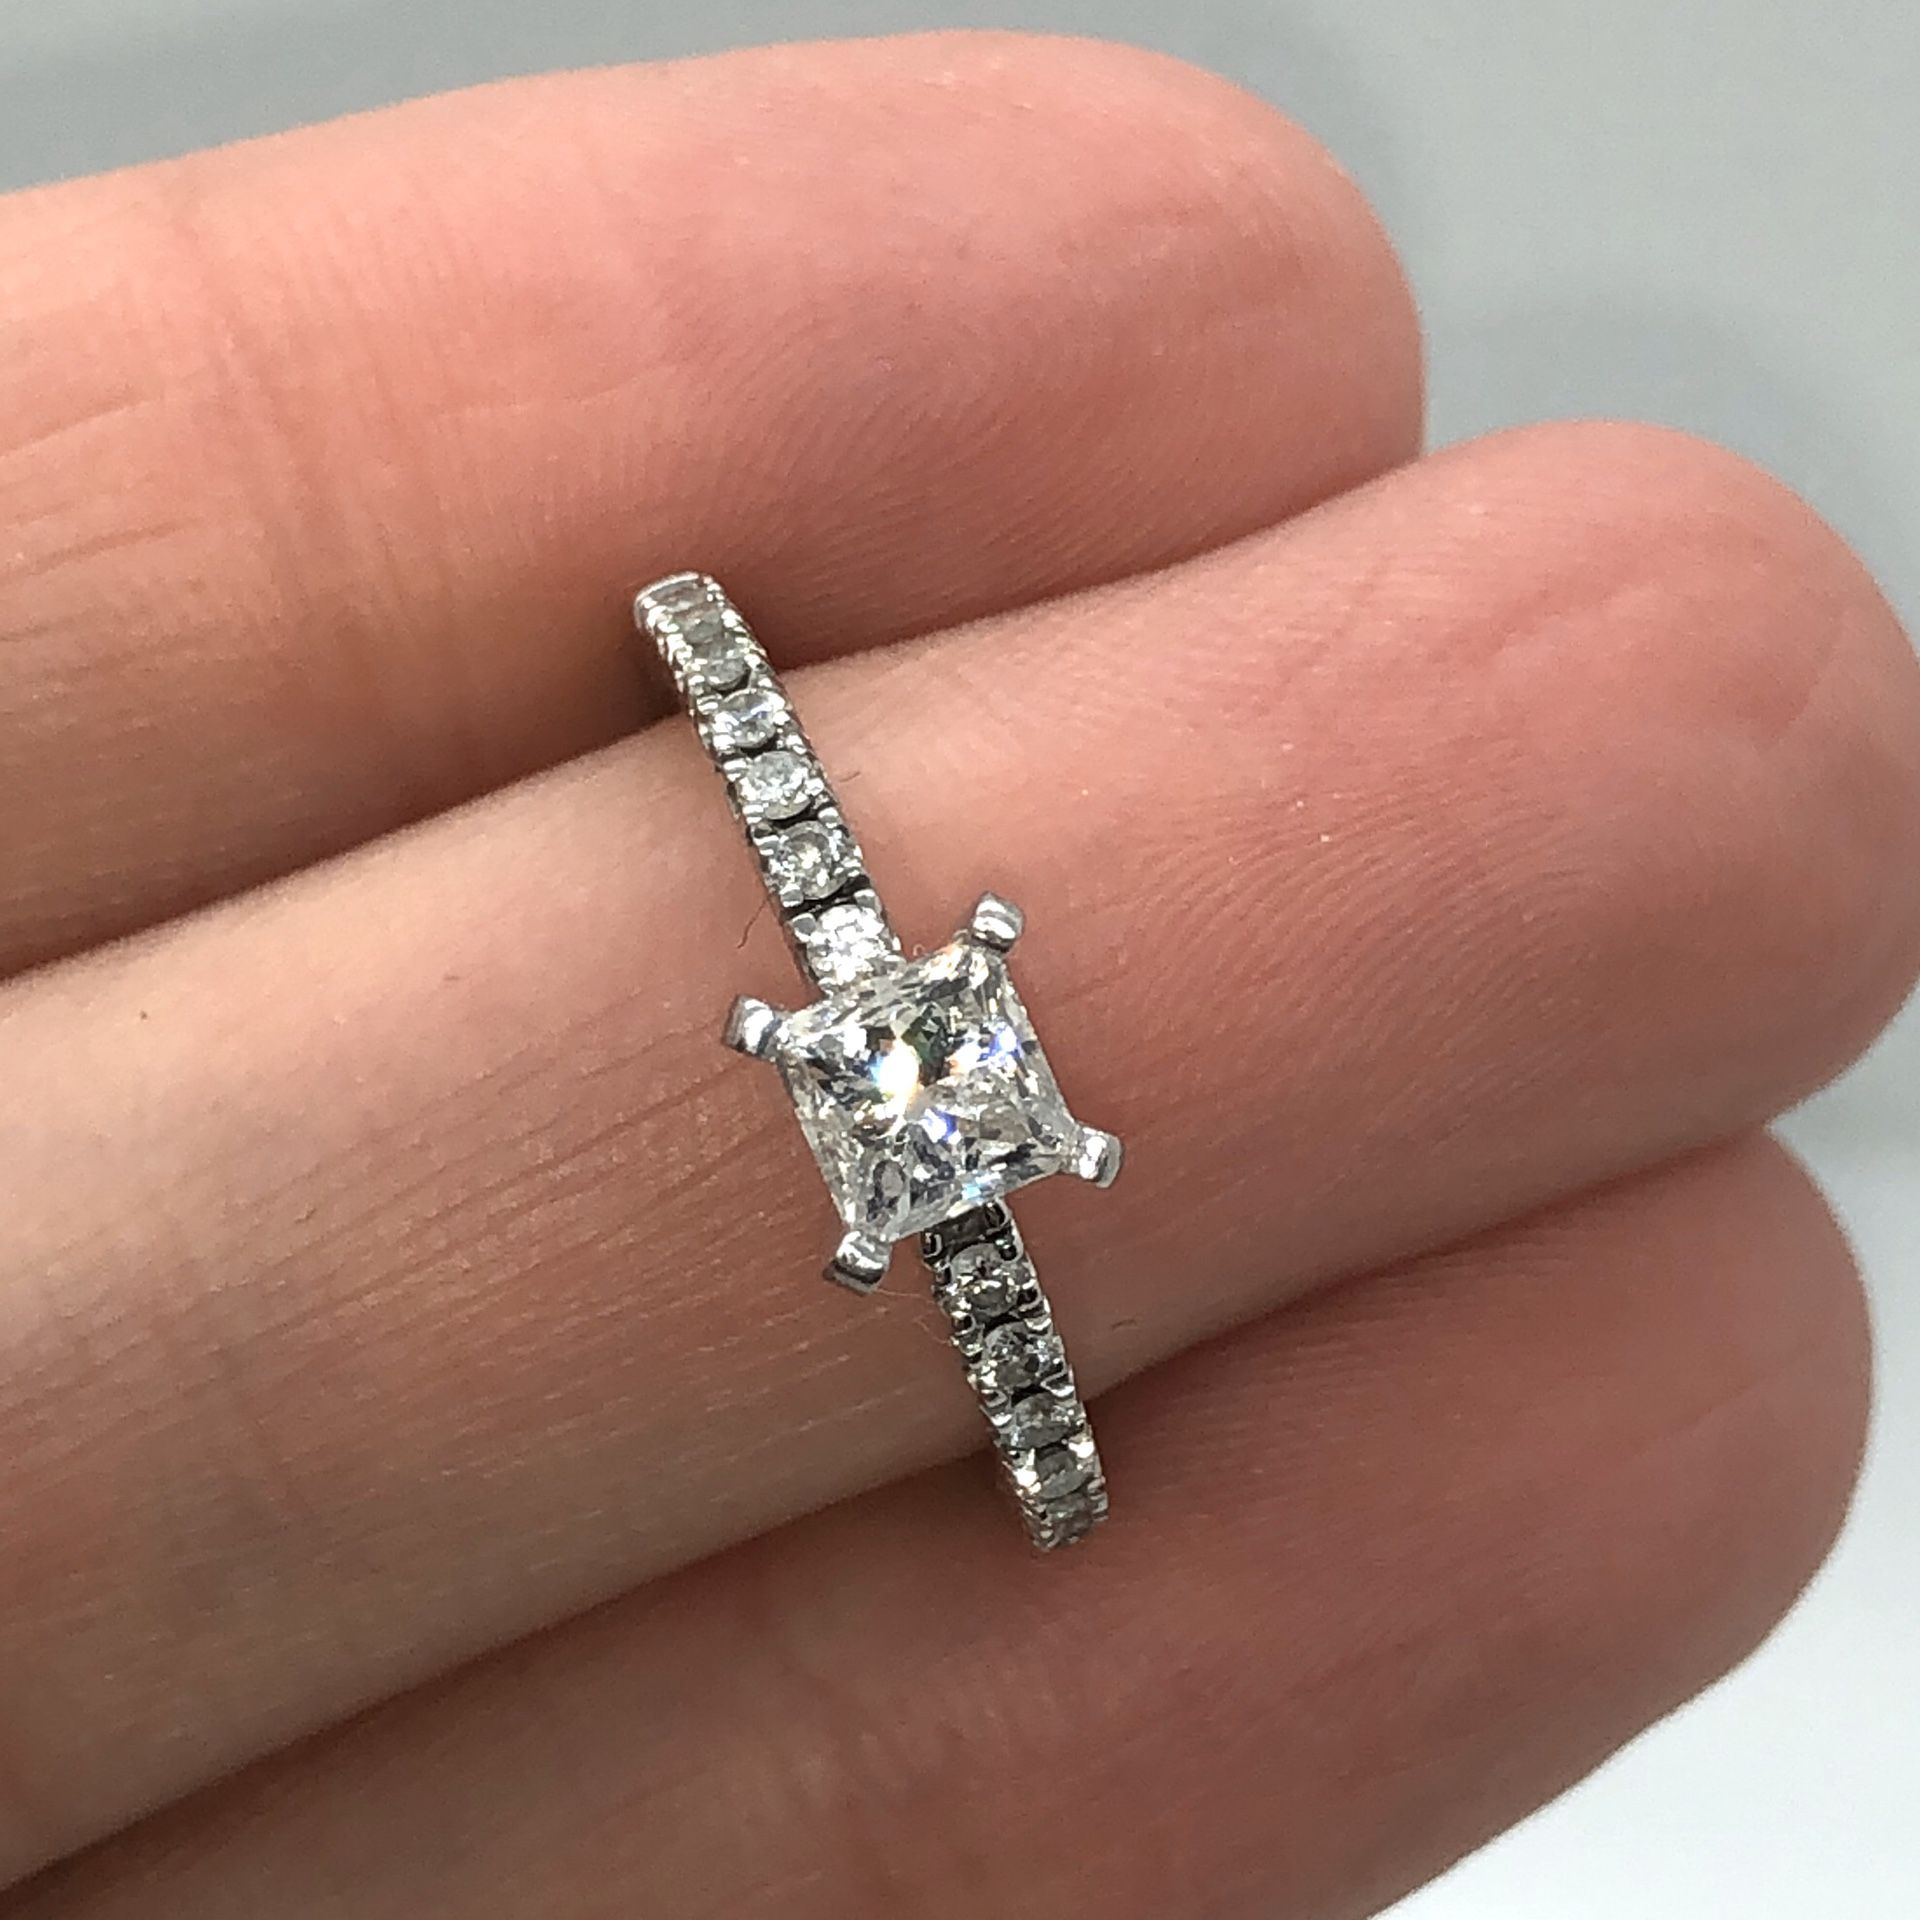 Jared Princess cut engagement ring size 5.5